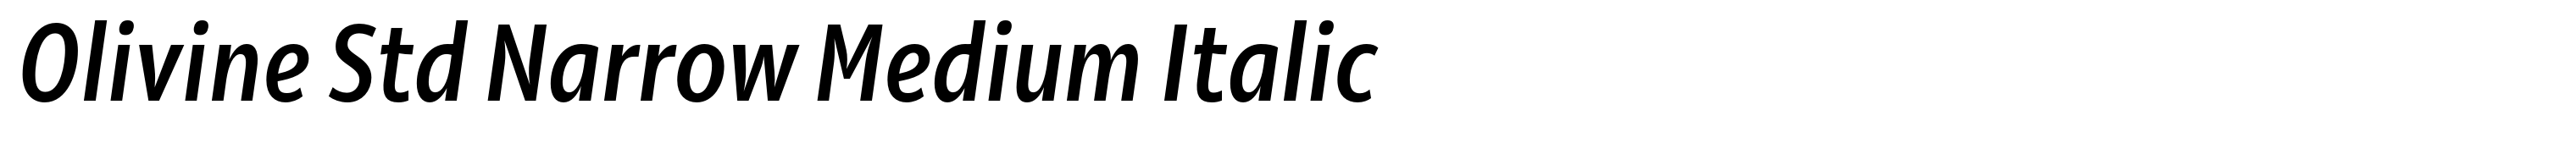 Olivine Std Narrow Medium Italic